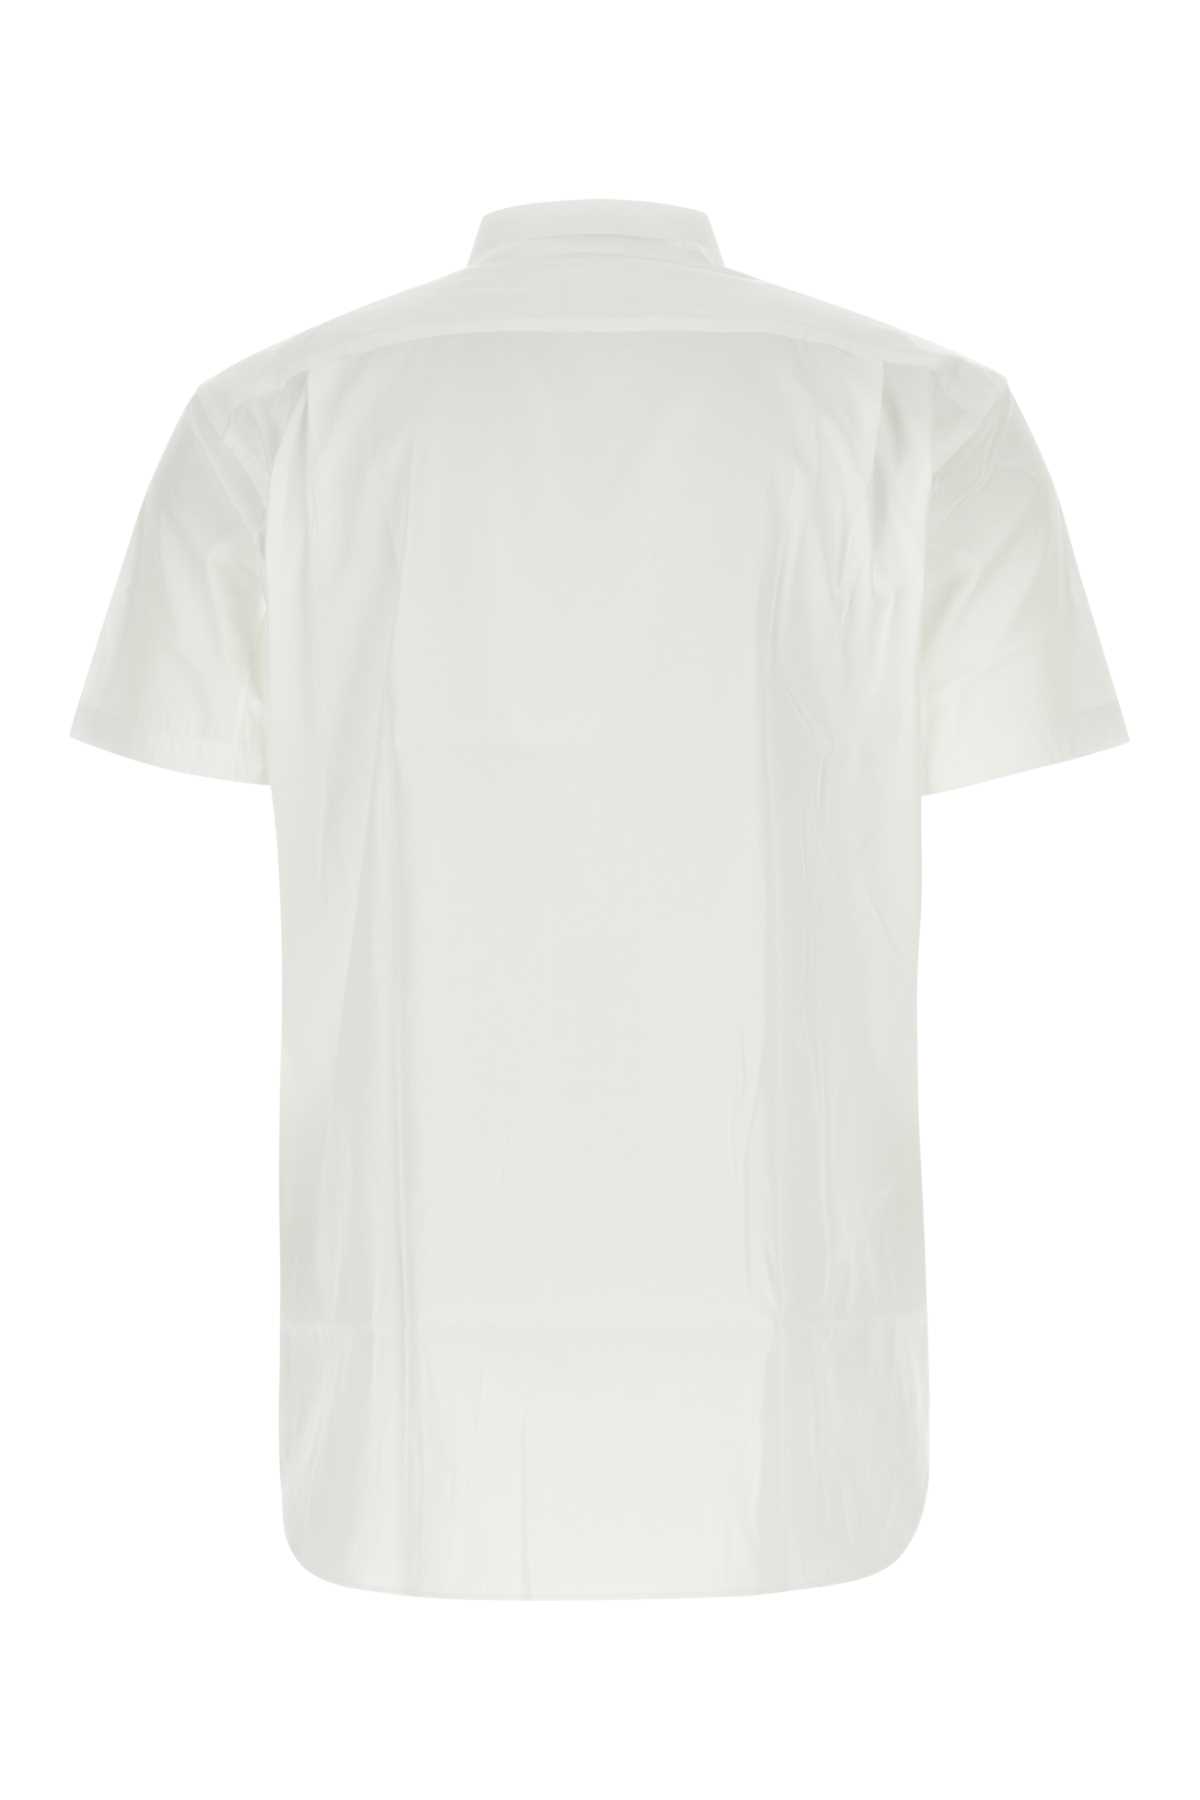 Comme Des Garçons Shirt White Poplin Shirt In Multicolor